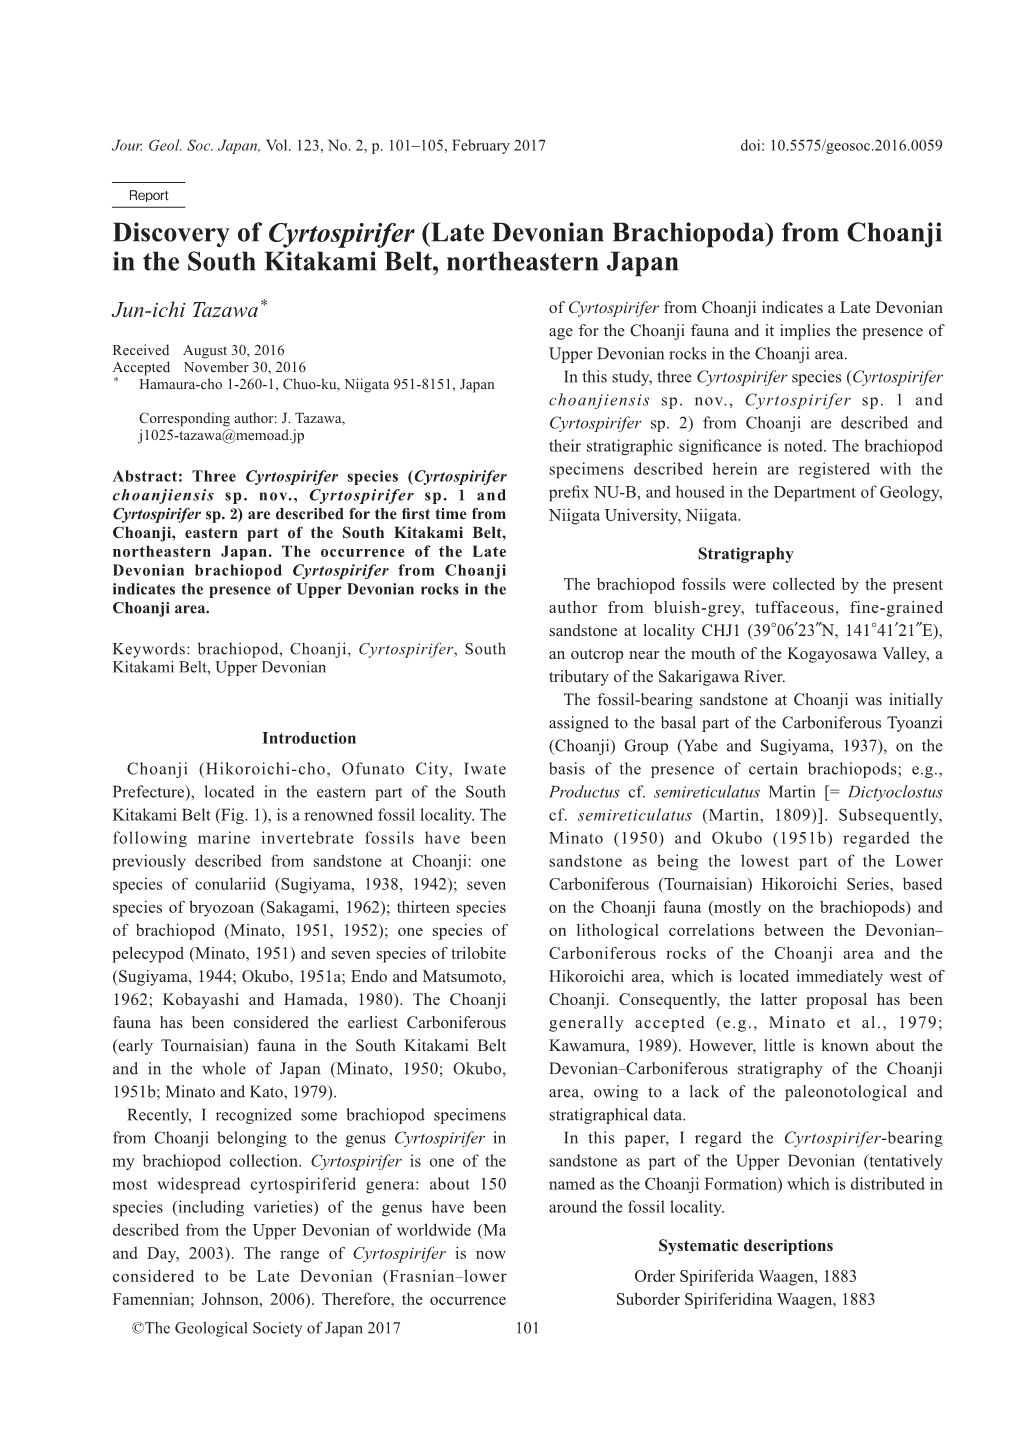 Discovery of Cyrtospirifer (Late Devonian Brachiopoda) from Choanji in the South Kitakami Belt, Northeastern Japan